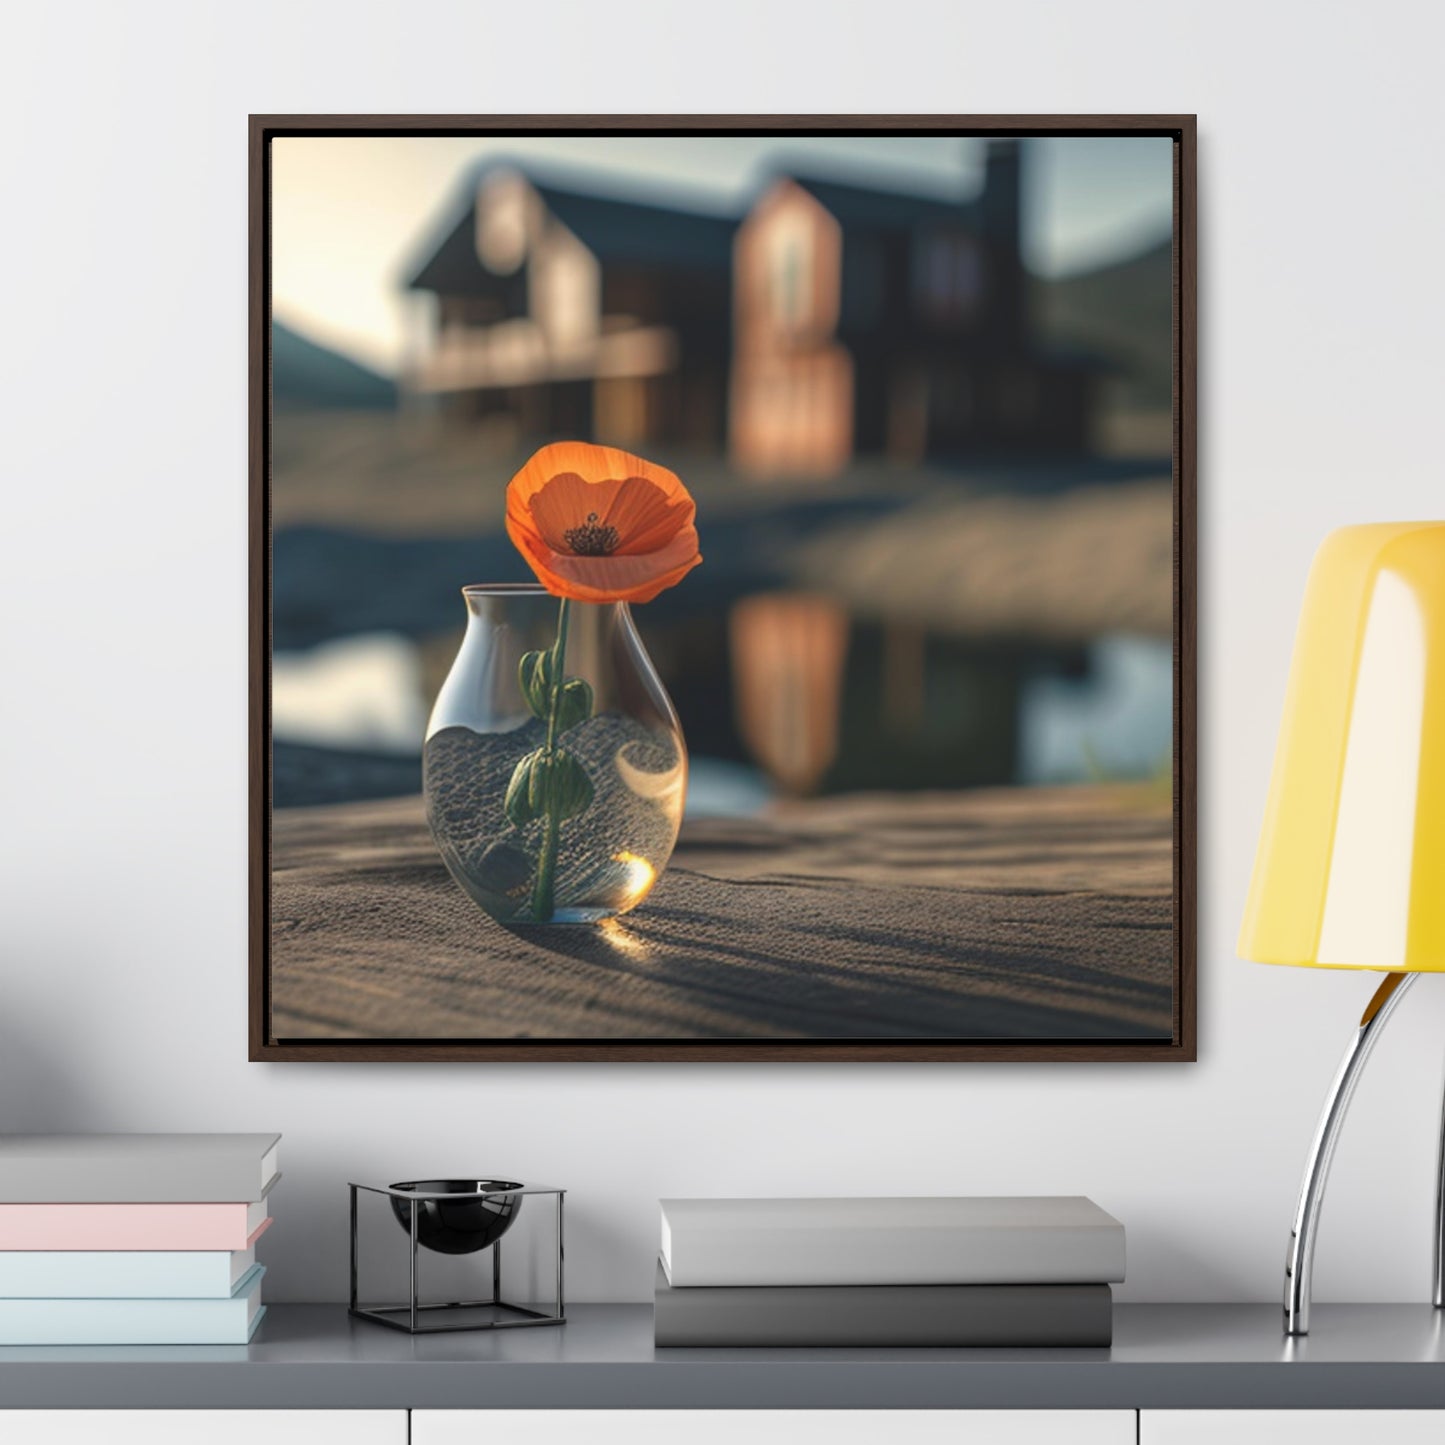 Gallery Canvas Wraps, Square Frame Orange Poppy in a Vase 4